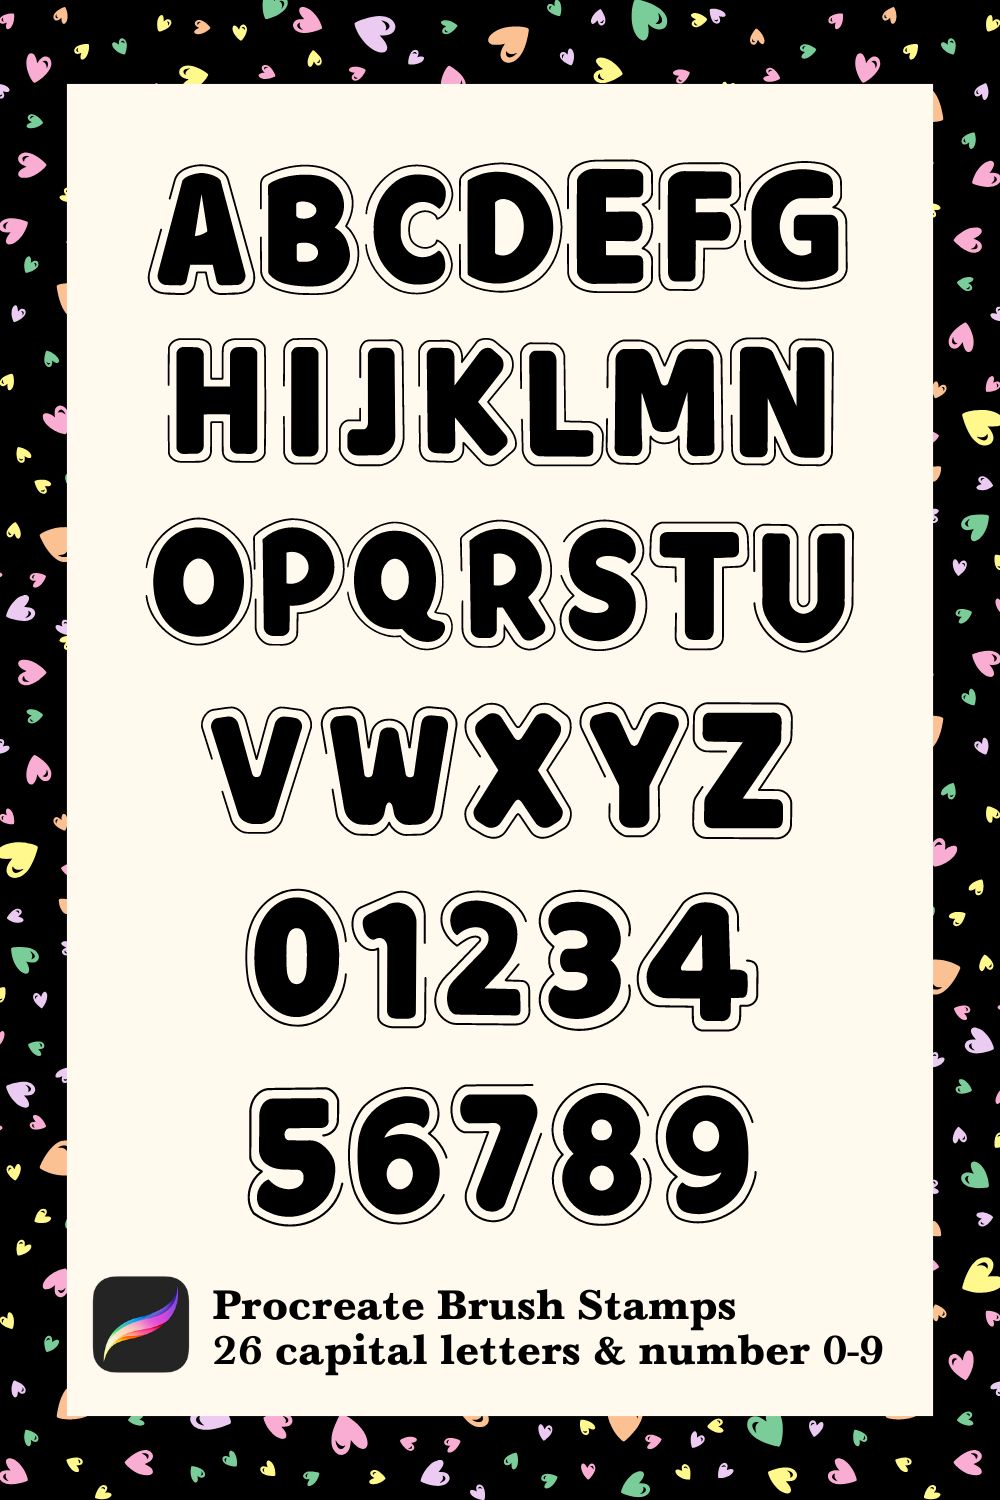 Alphabet & Number Brush Stamp Procreate pinterest preview image.